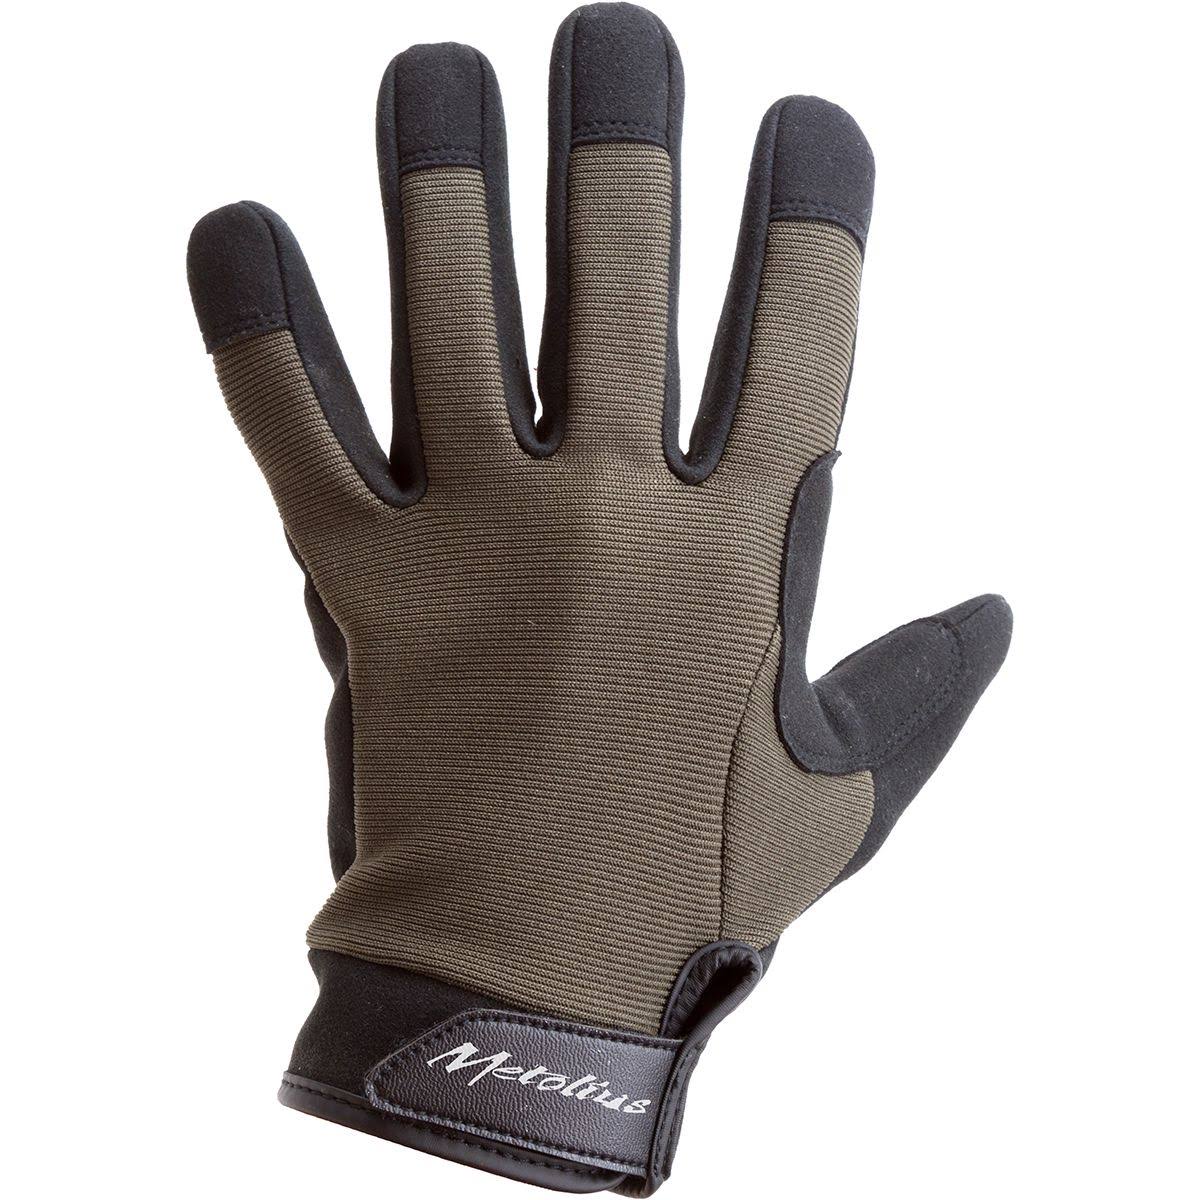 Metolius Talon Belay Gloves (Size XL, Black)